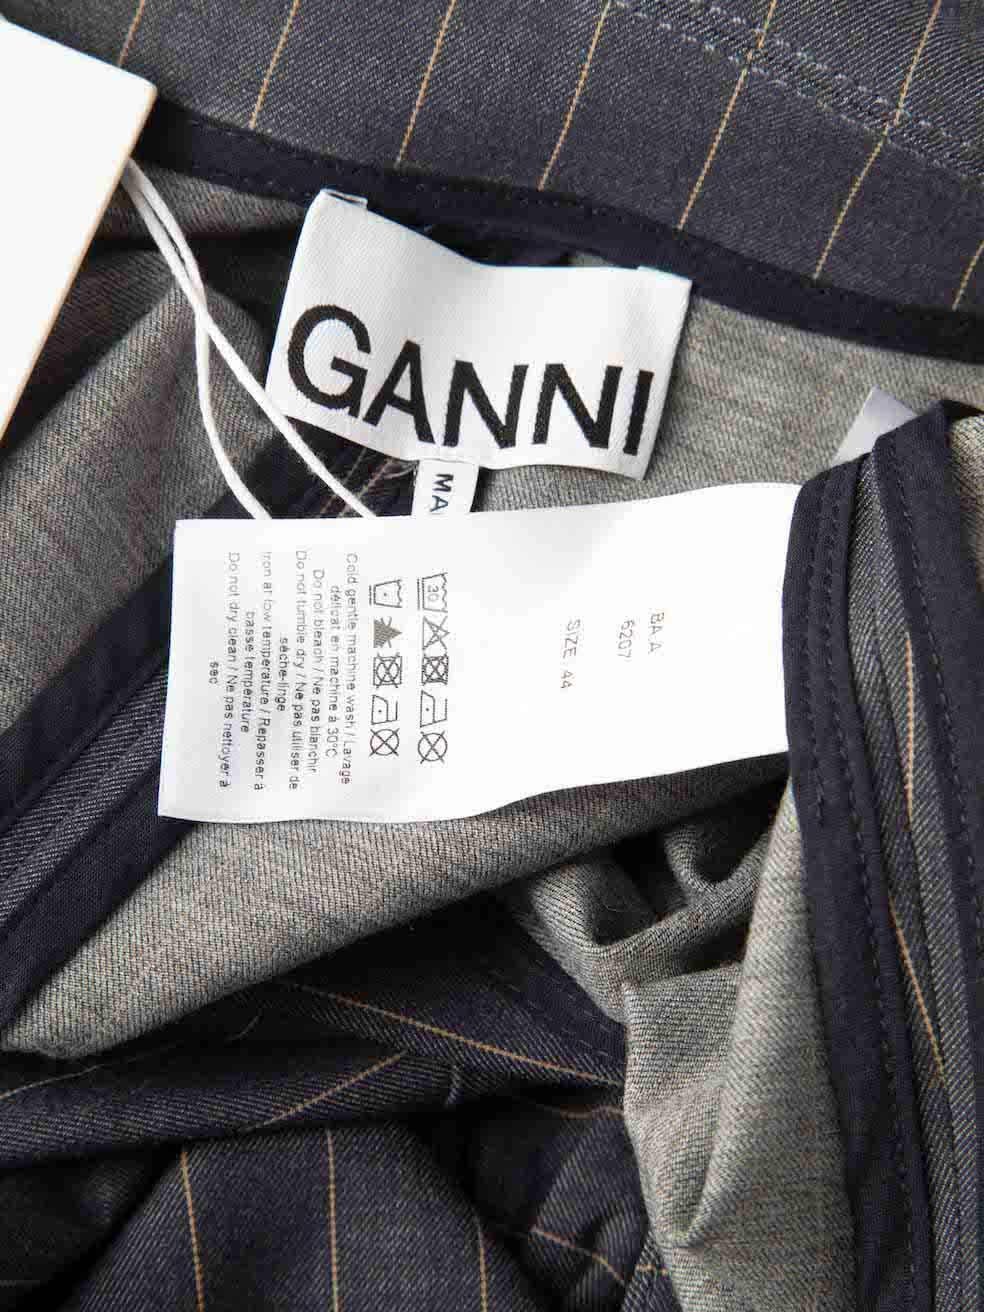 Women's Ganni Grey Pinstripe Ruched Dress Size XXL For Sale